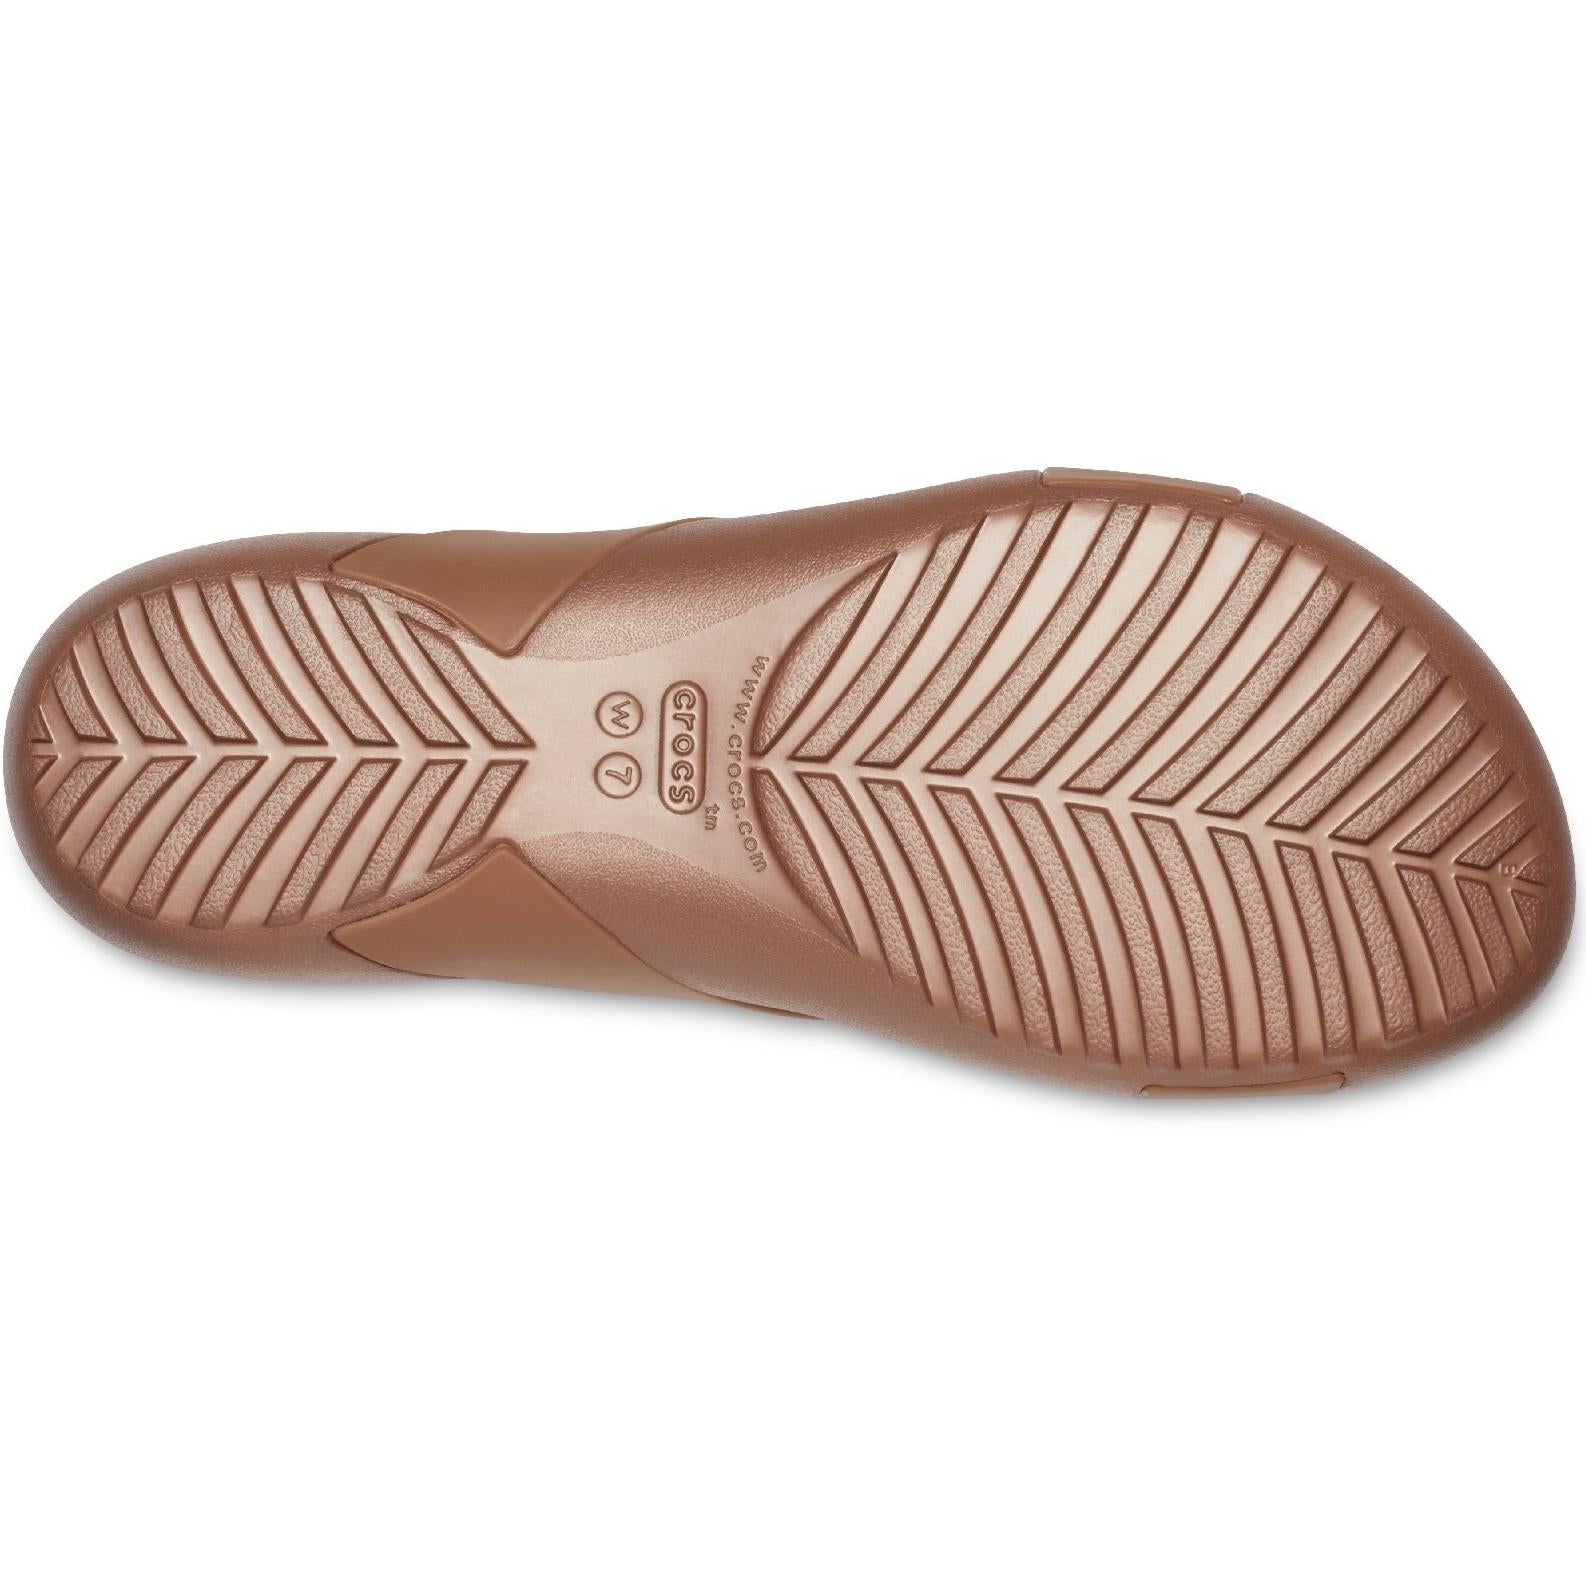 Crocs Serena Cross Band Slide Sandals